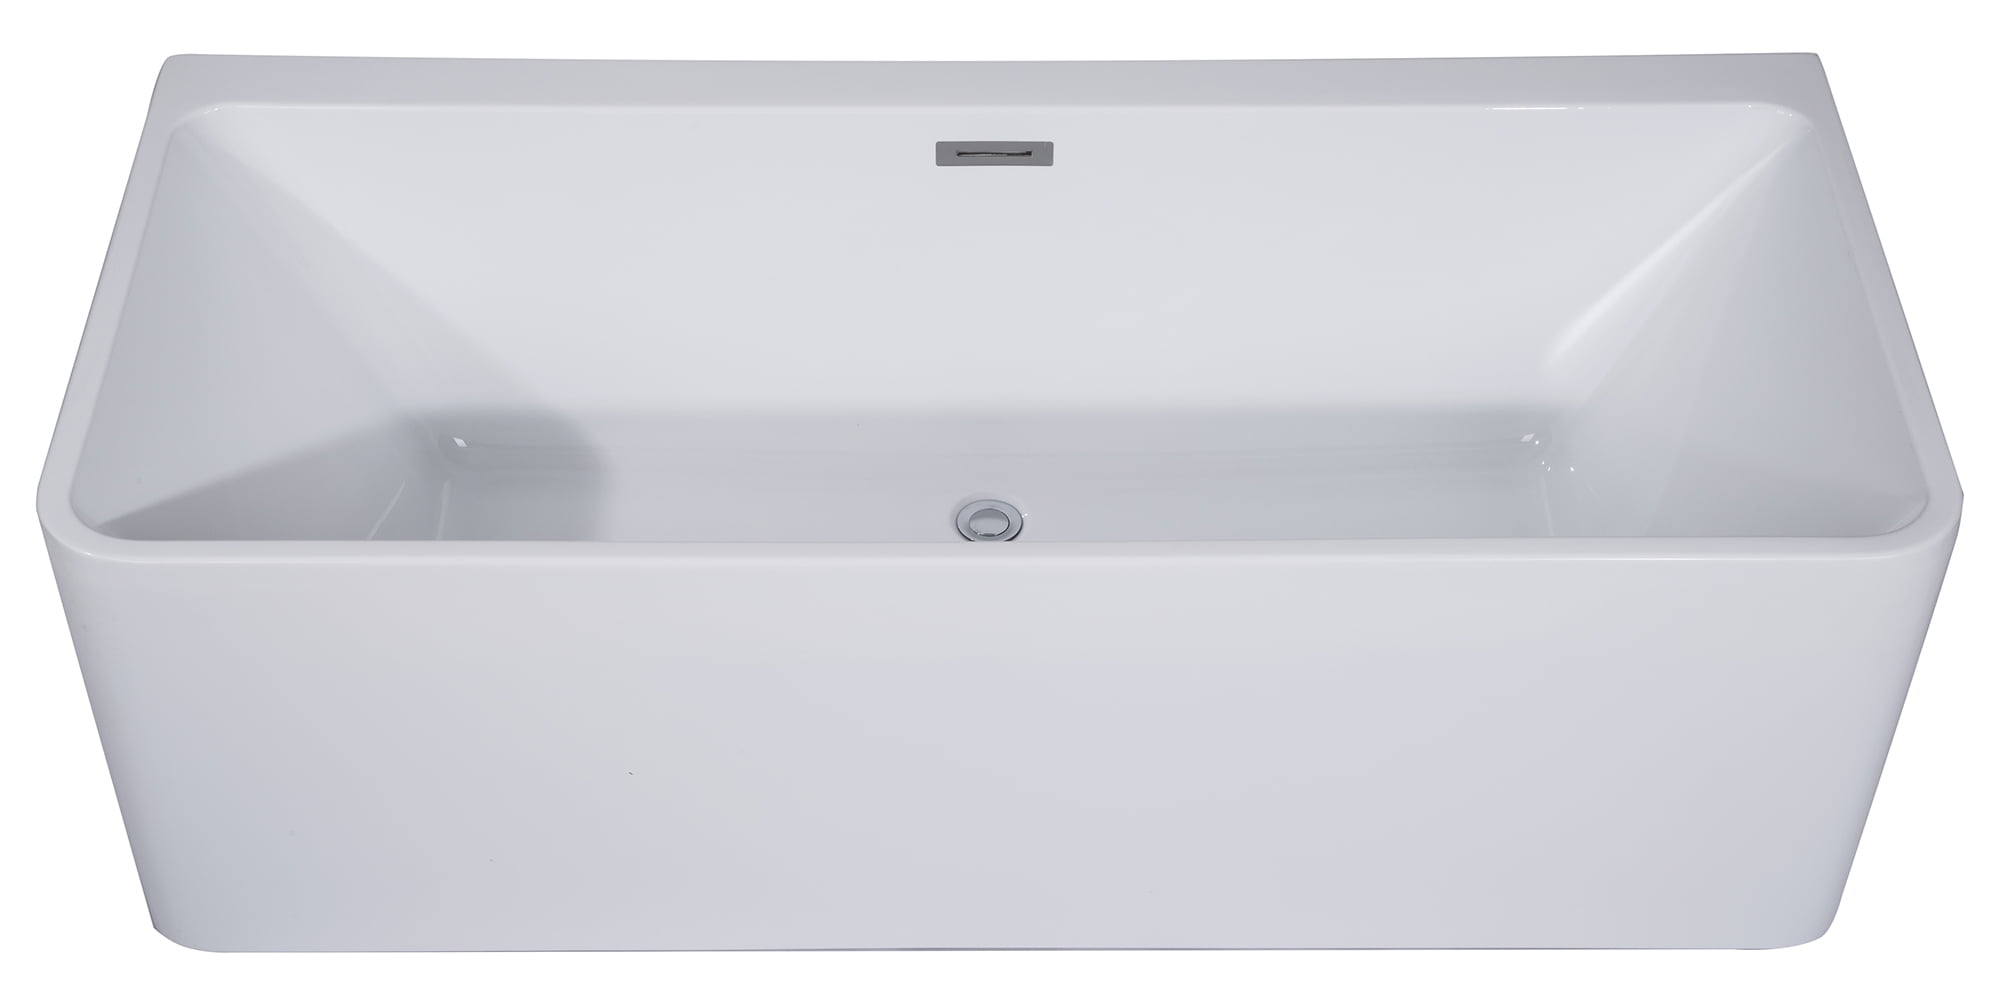 Ab8858 59 In. White Rectangular Acrylic Free Standing Soaking Bathtub